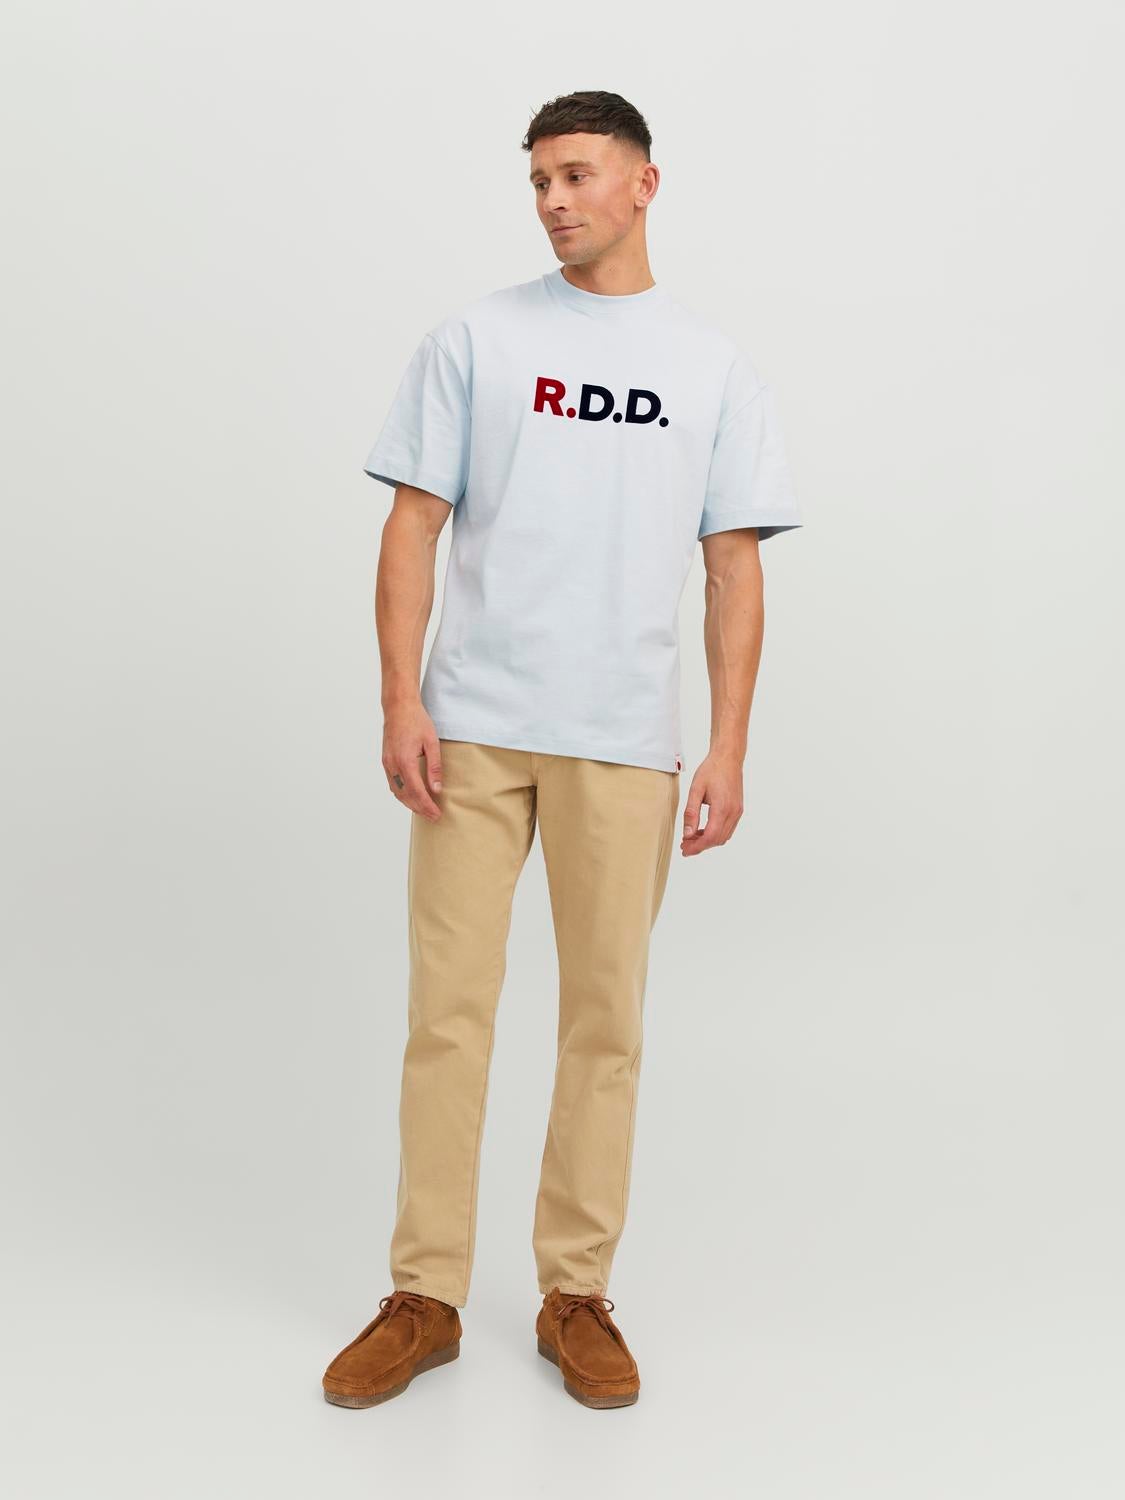 RDD Logotyp Rundringning T-shirt